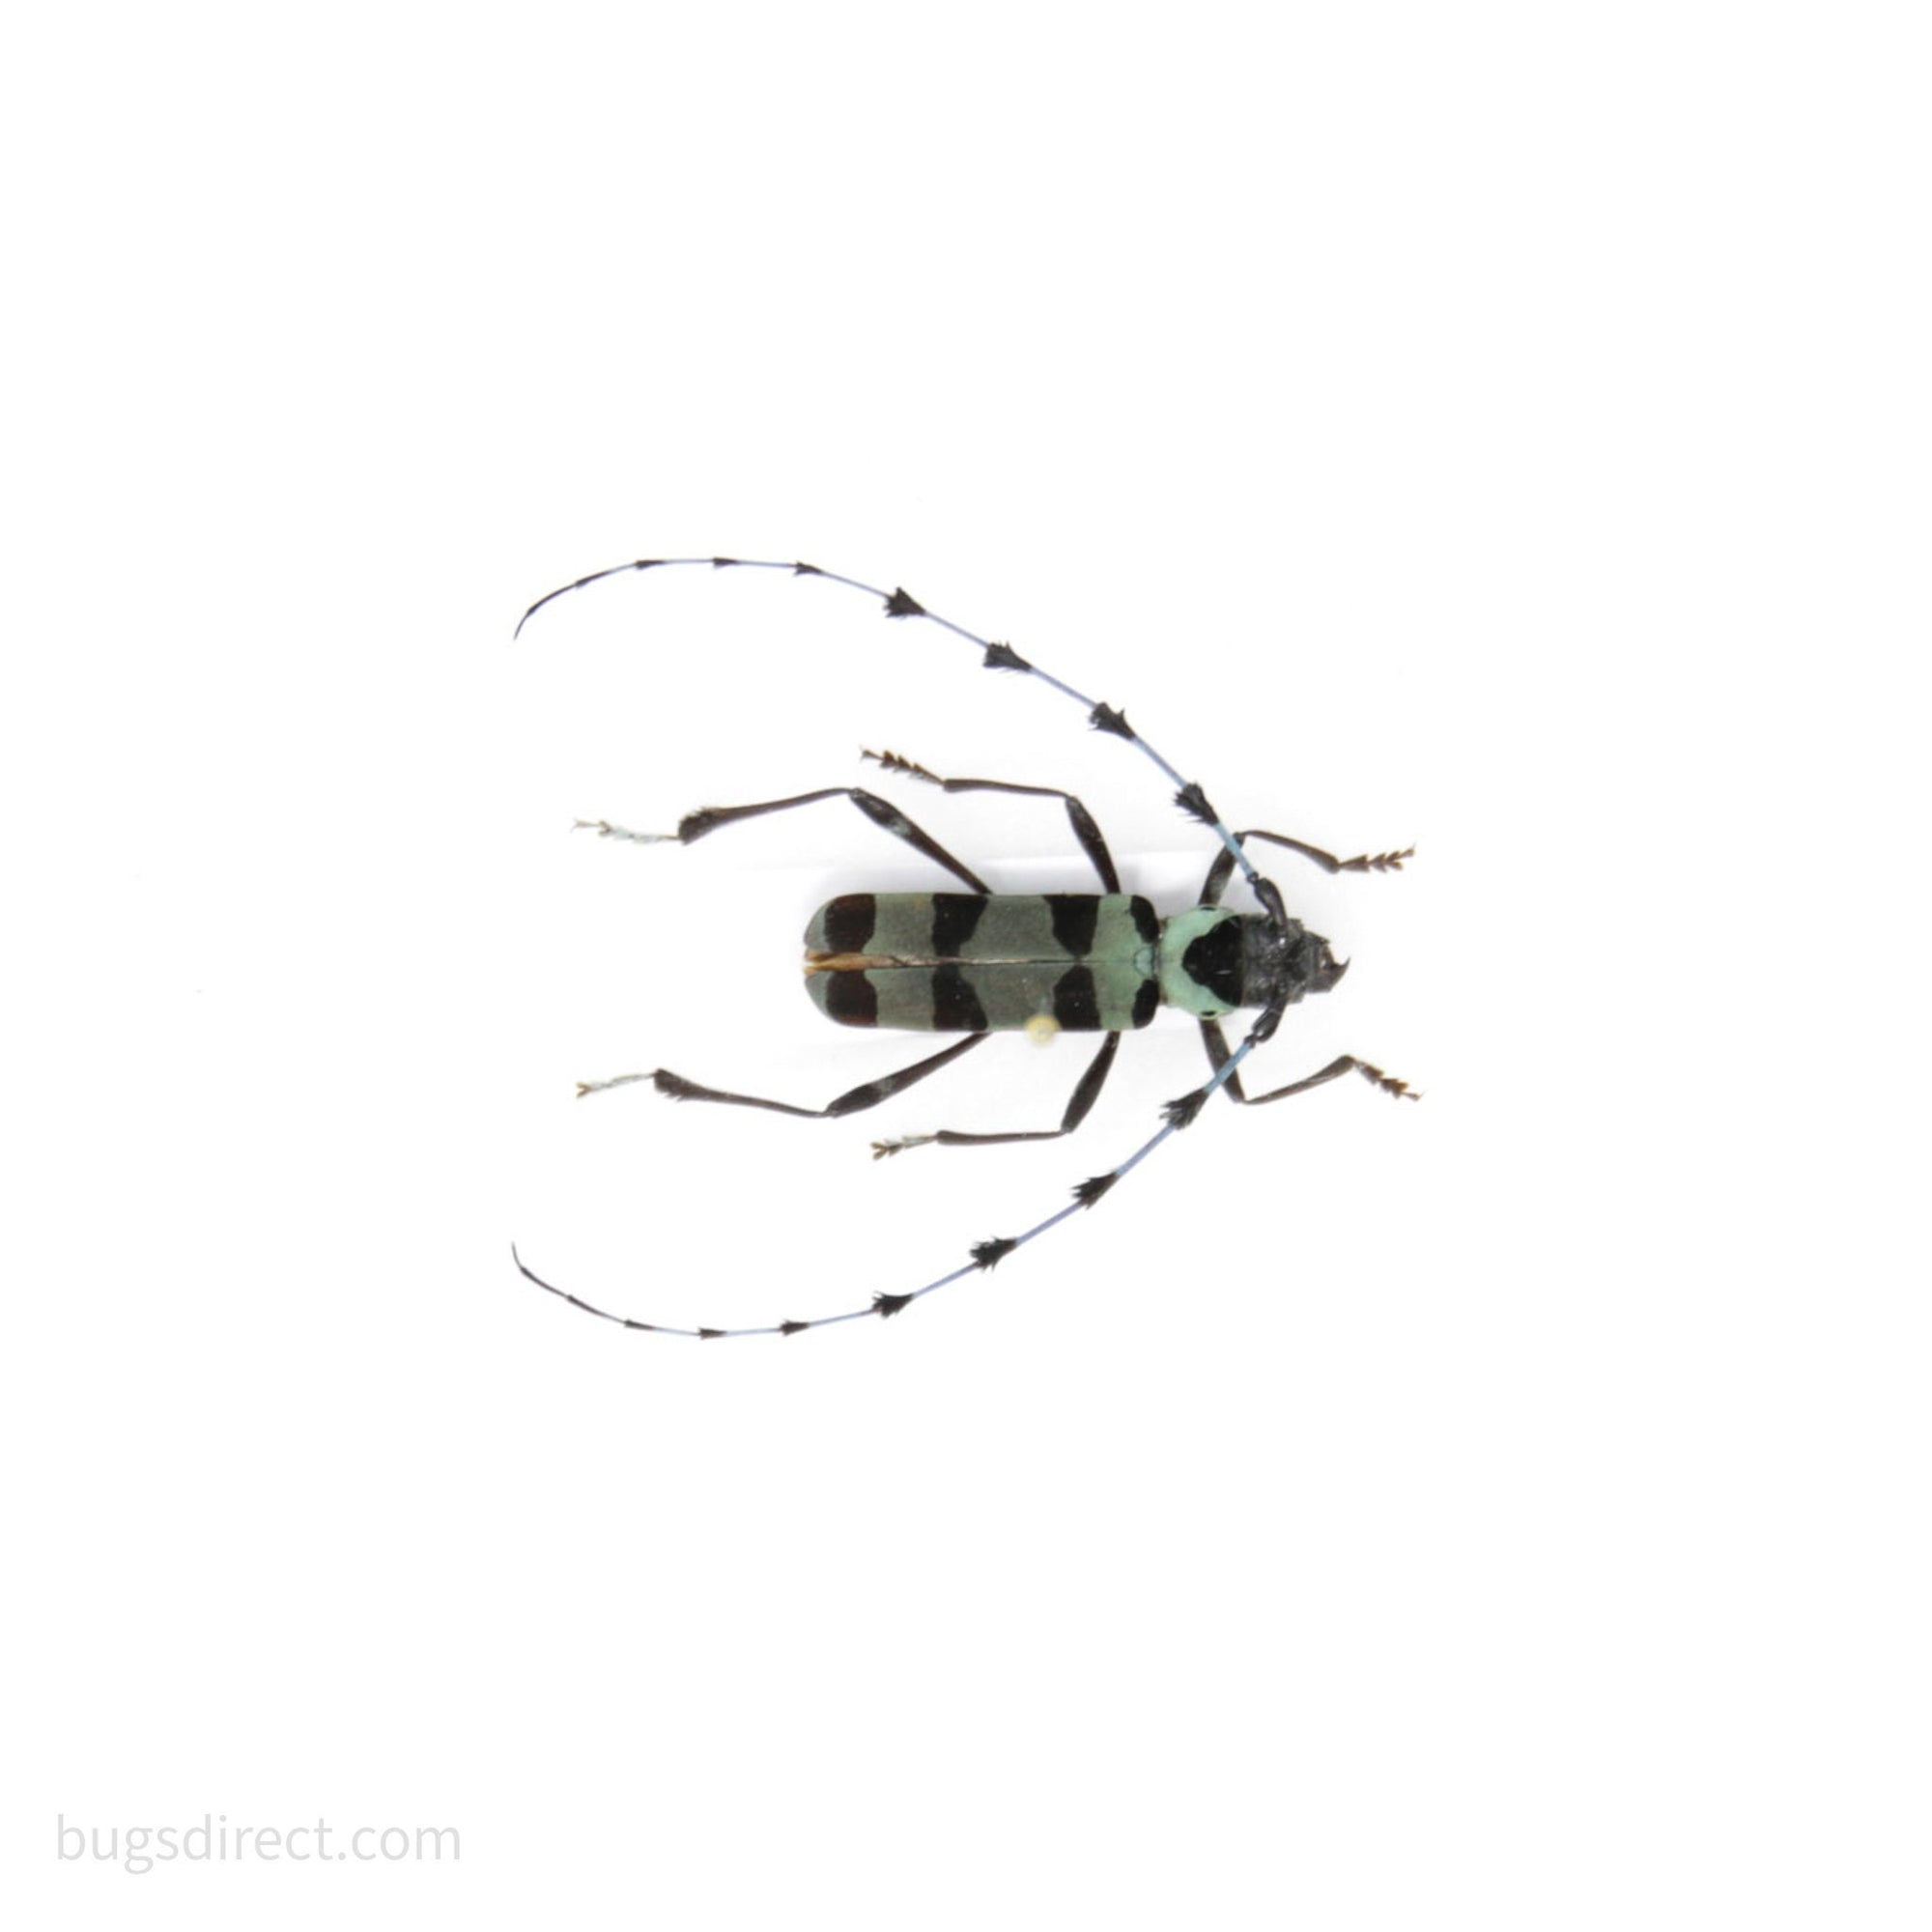 Rosalia iameeri, Guanxi Province, China, A1 Real Beetle Pinned Set Specimen, Entomology Taxidermy #OC121